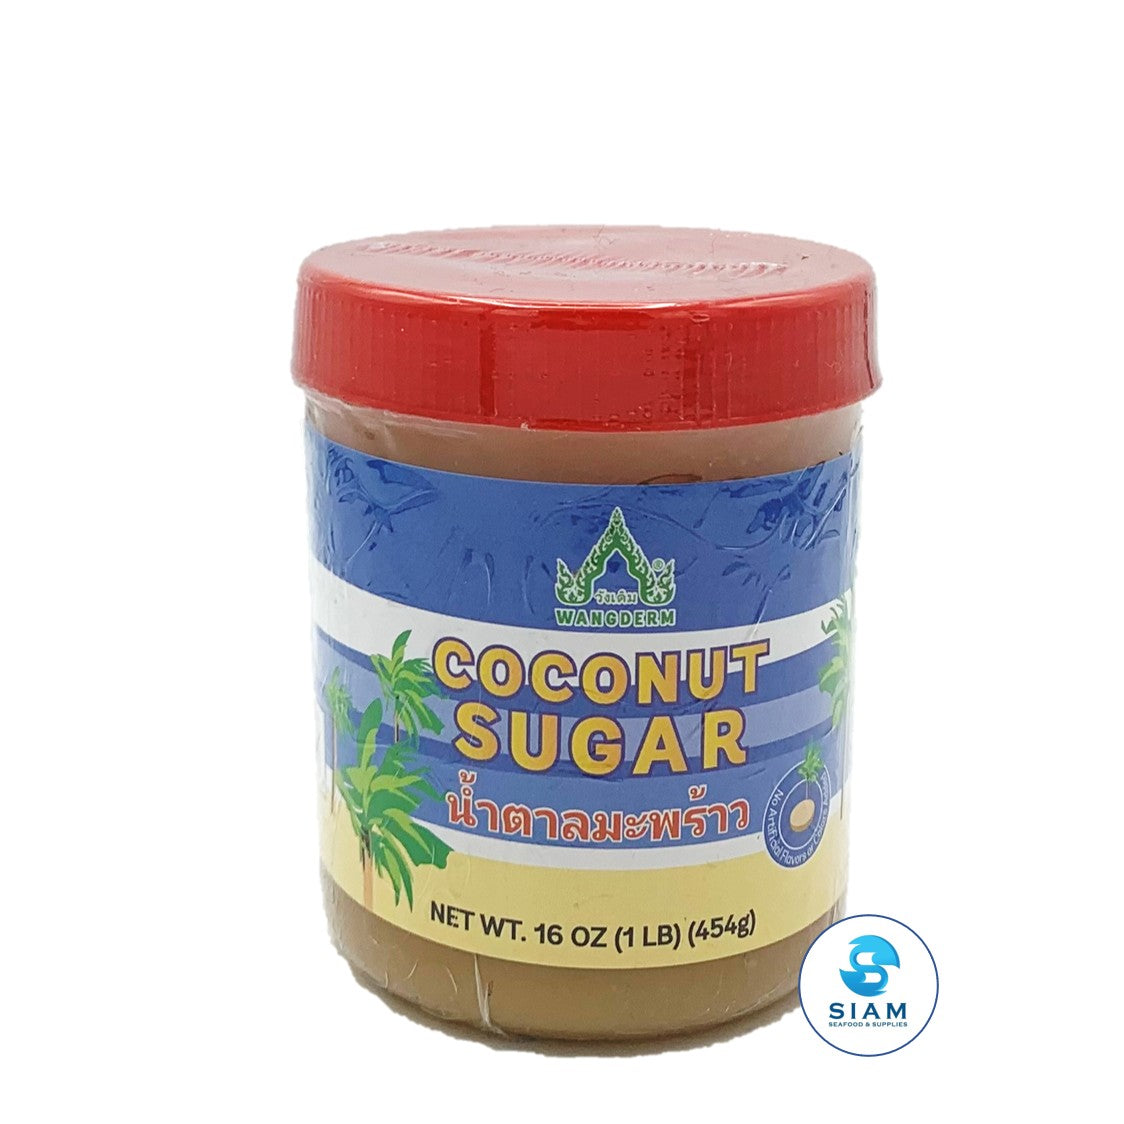 Coconut Sugar - Wang Derm (1 lb-Net Wt 18.4 oz) น้ำตาลมะพร้าว วังเดิม shippable Wang Derm